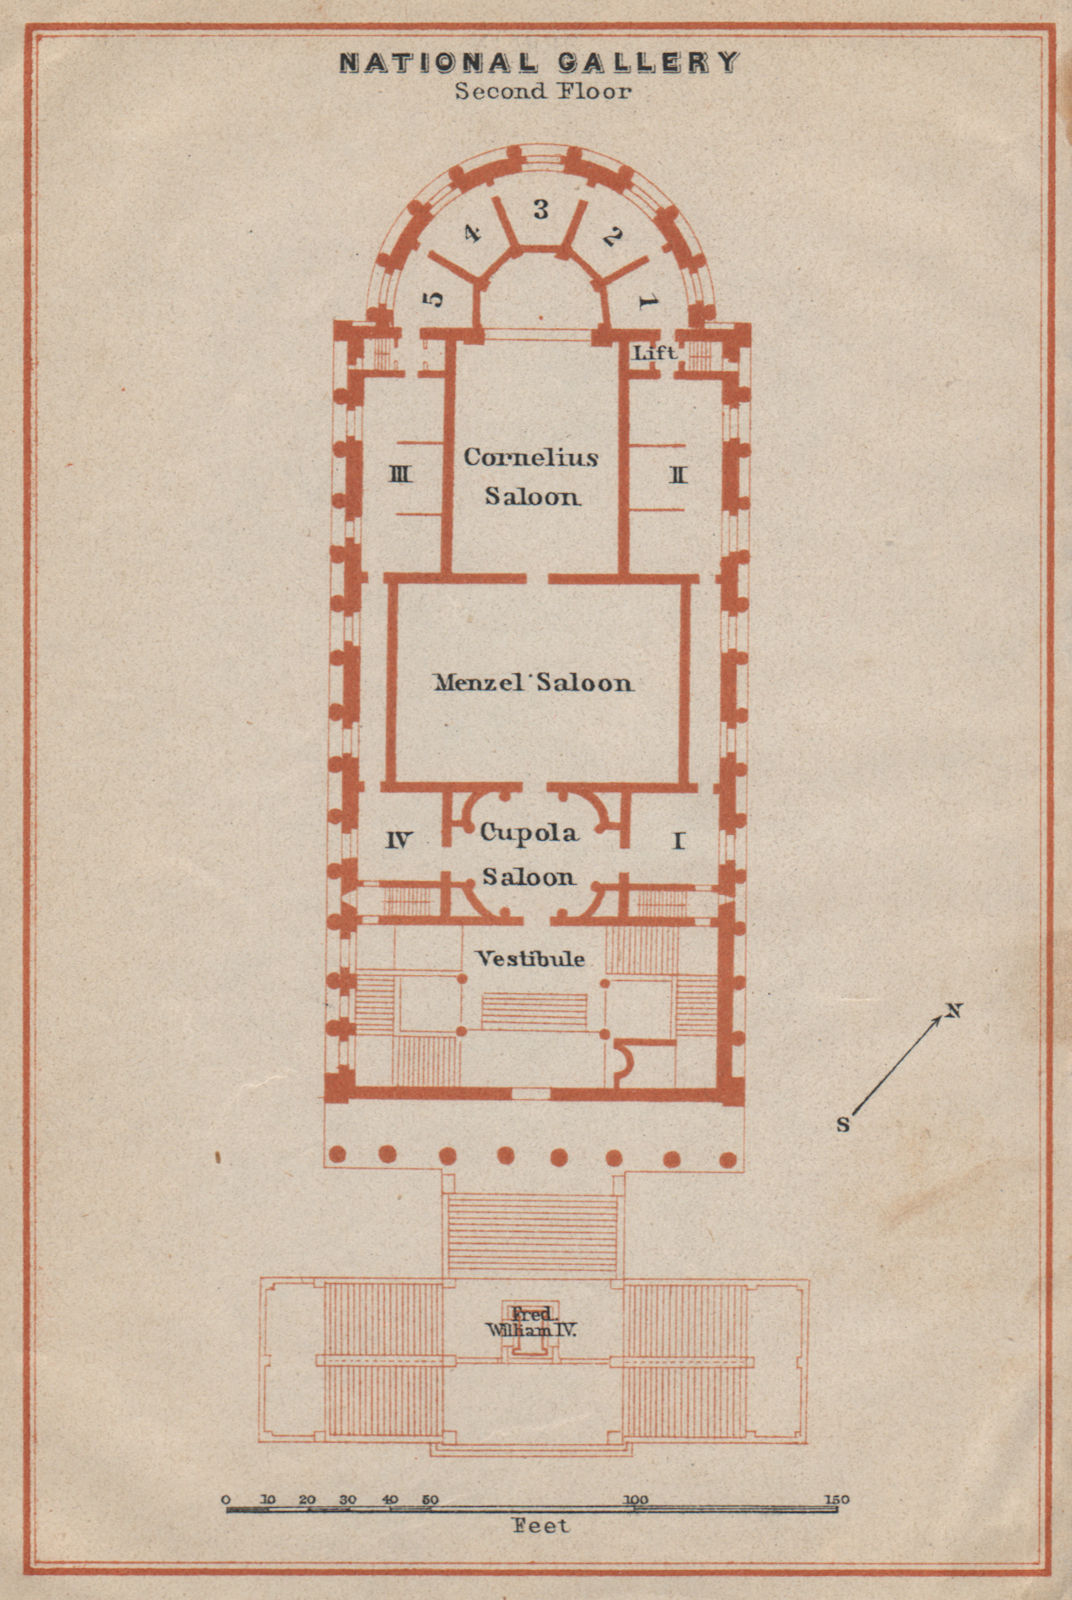 ALTE NATIONALGALERIE, Berlin. Old National gallery. Second floor plan 1910 map